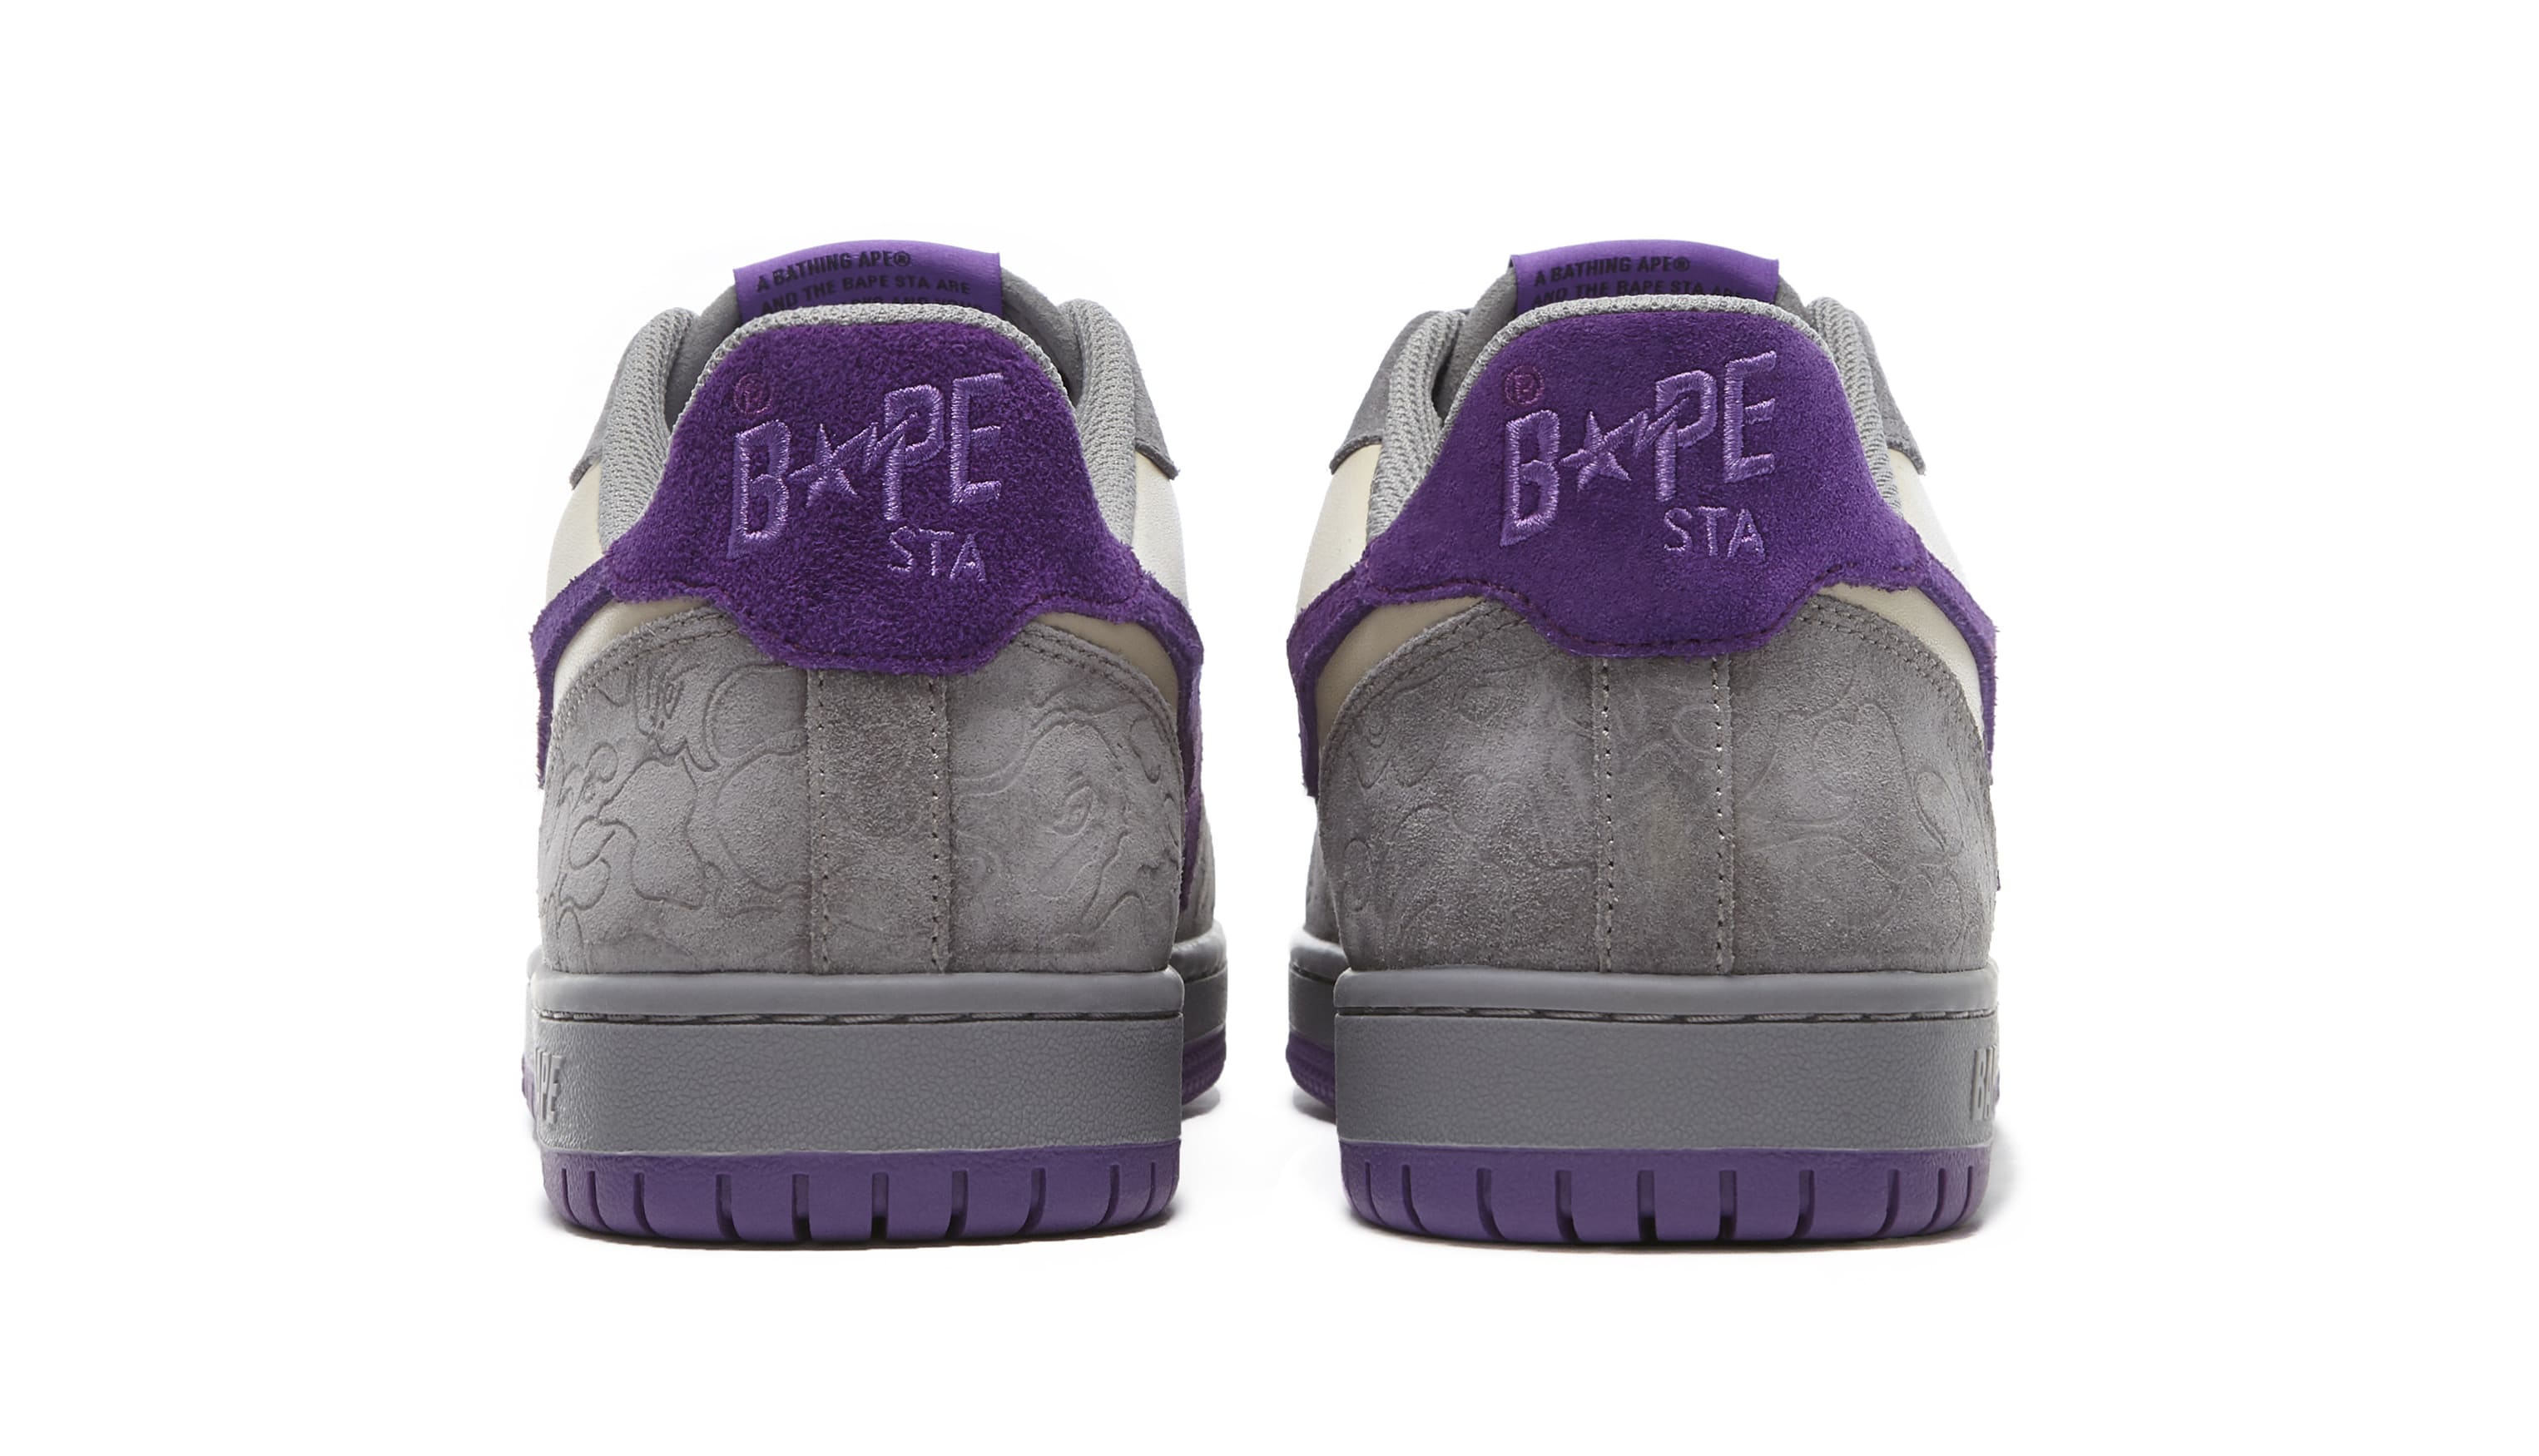 Bape Court Sta Mist Grey and Royal Purple Heel